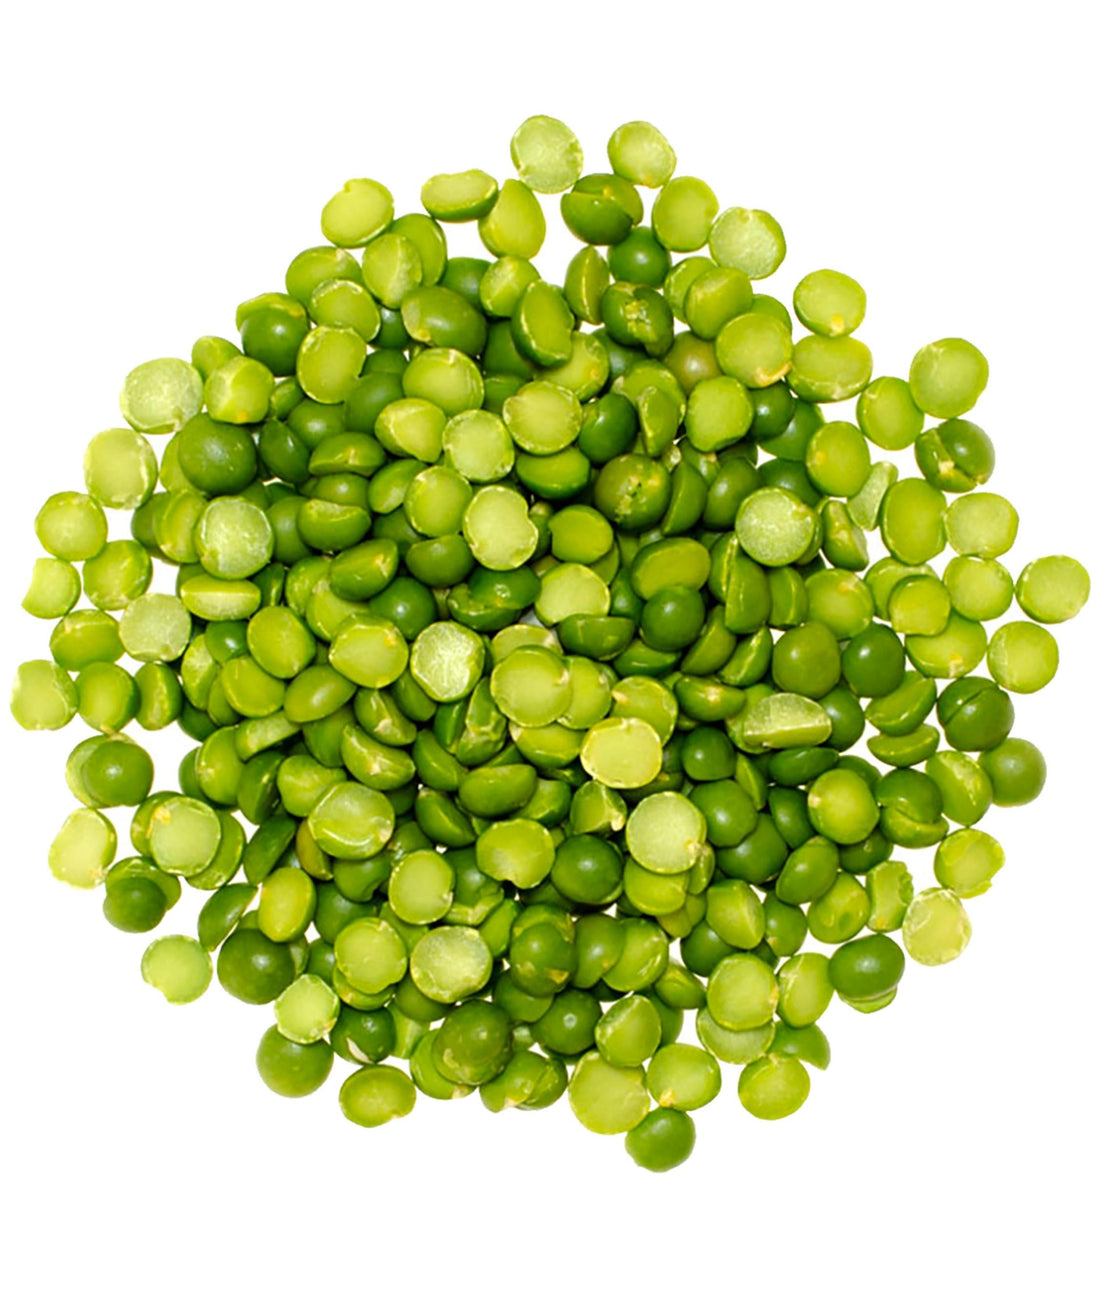 Palouse Brand Green Split Peas, 3 LBS Cotton Drawstring Bag